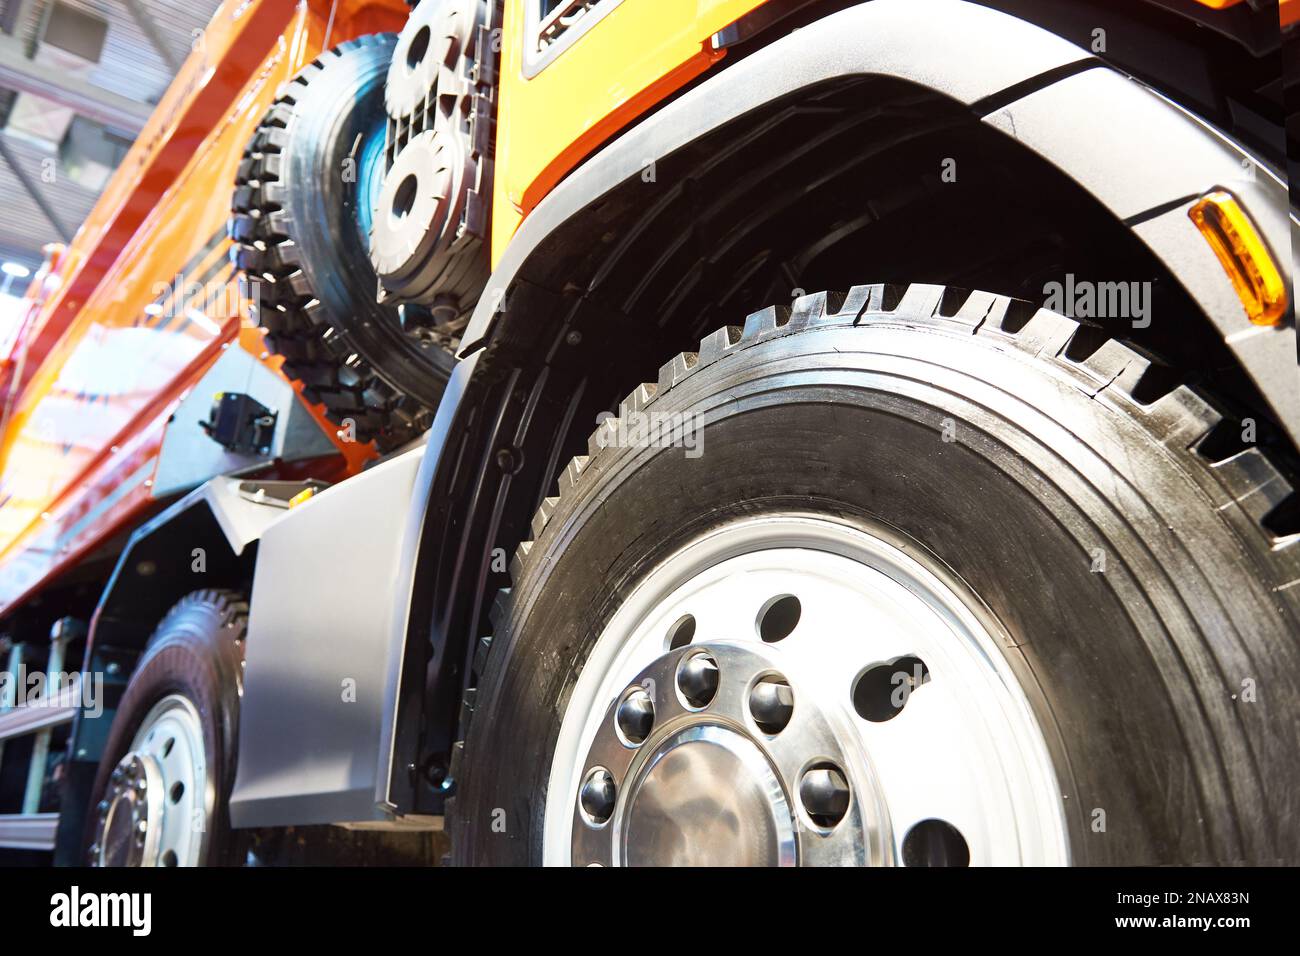 Truck wheel on auto show Stock Photo